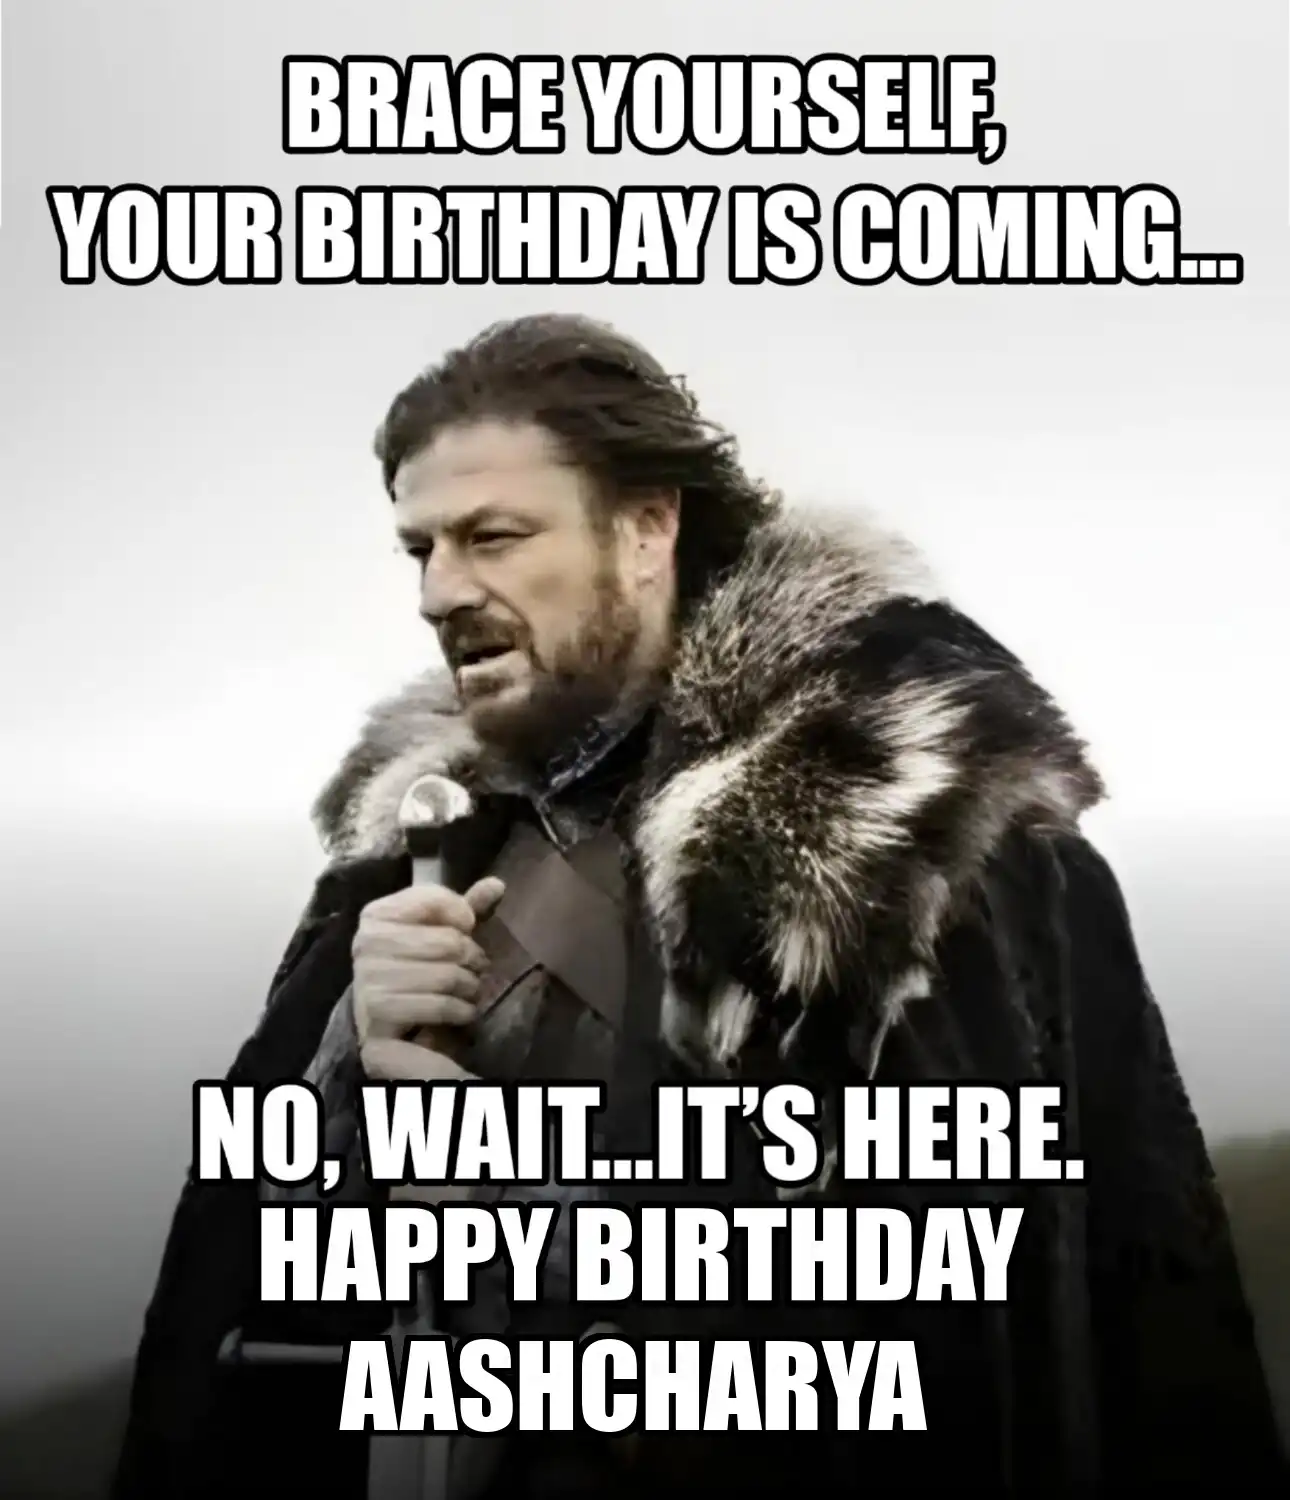 Happy Birthday Aashcharya Brace Yourself Your Birthday Is Coming Meme